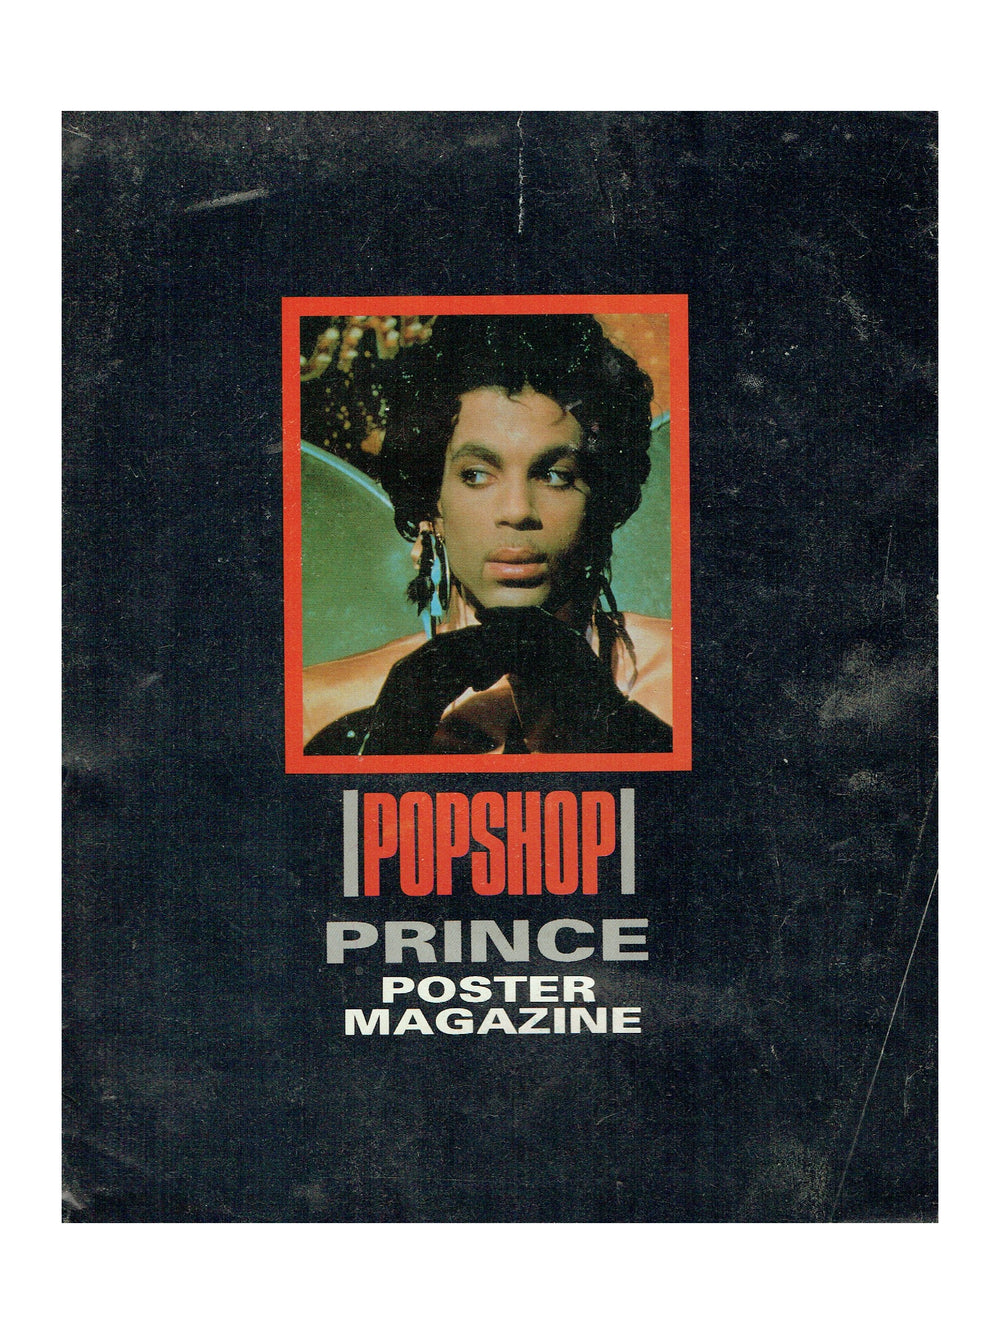 Prince Pop Shop Poster Magazine